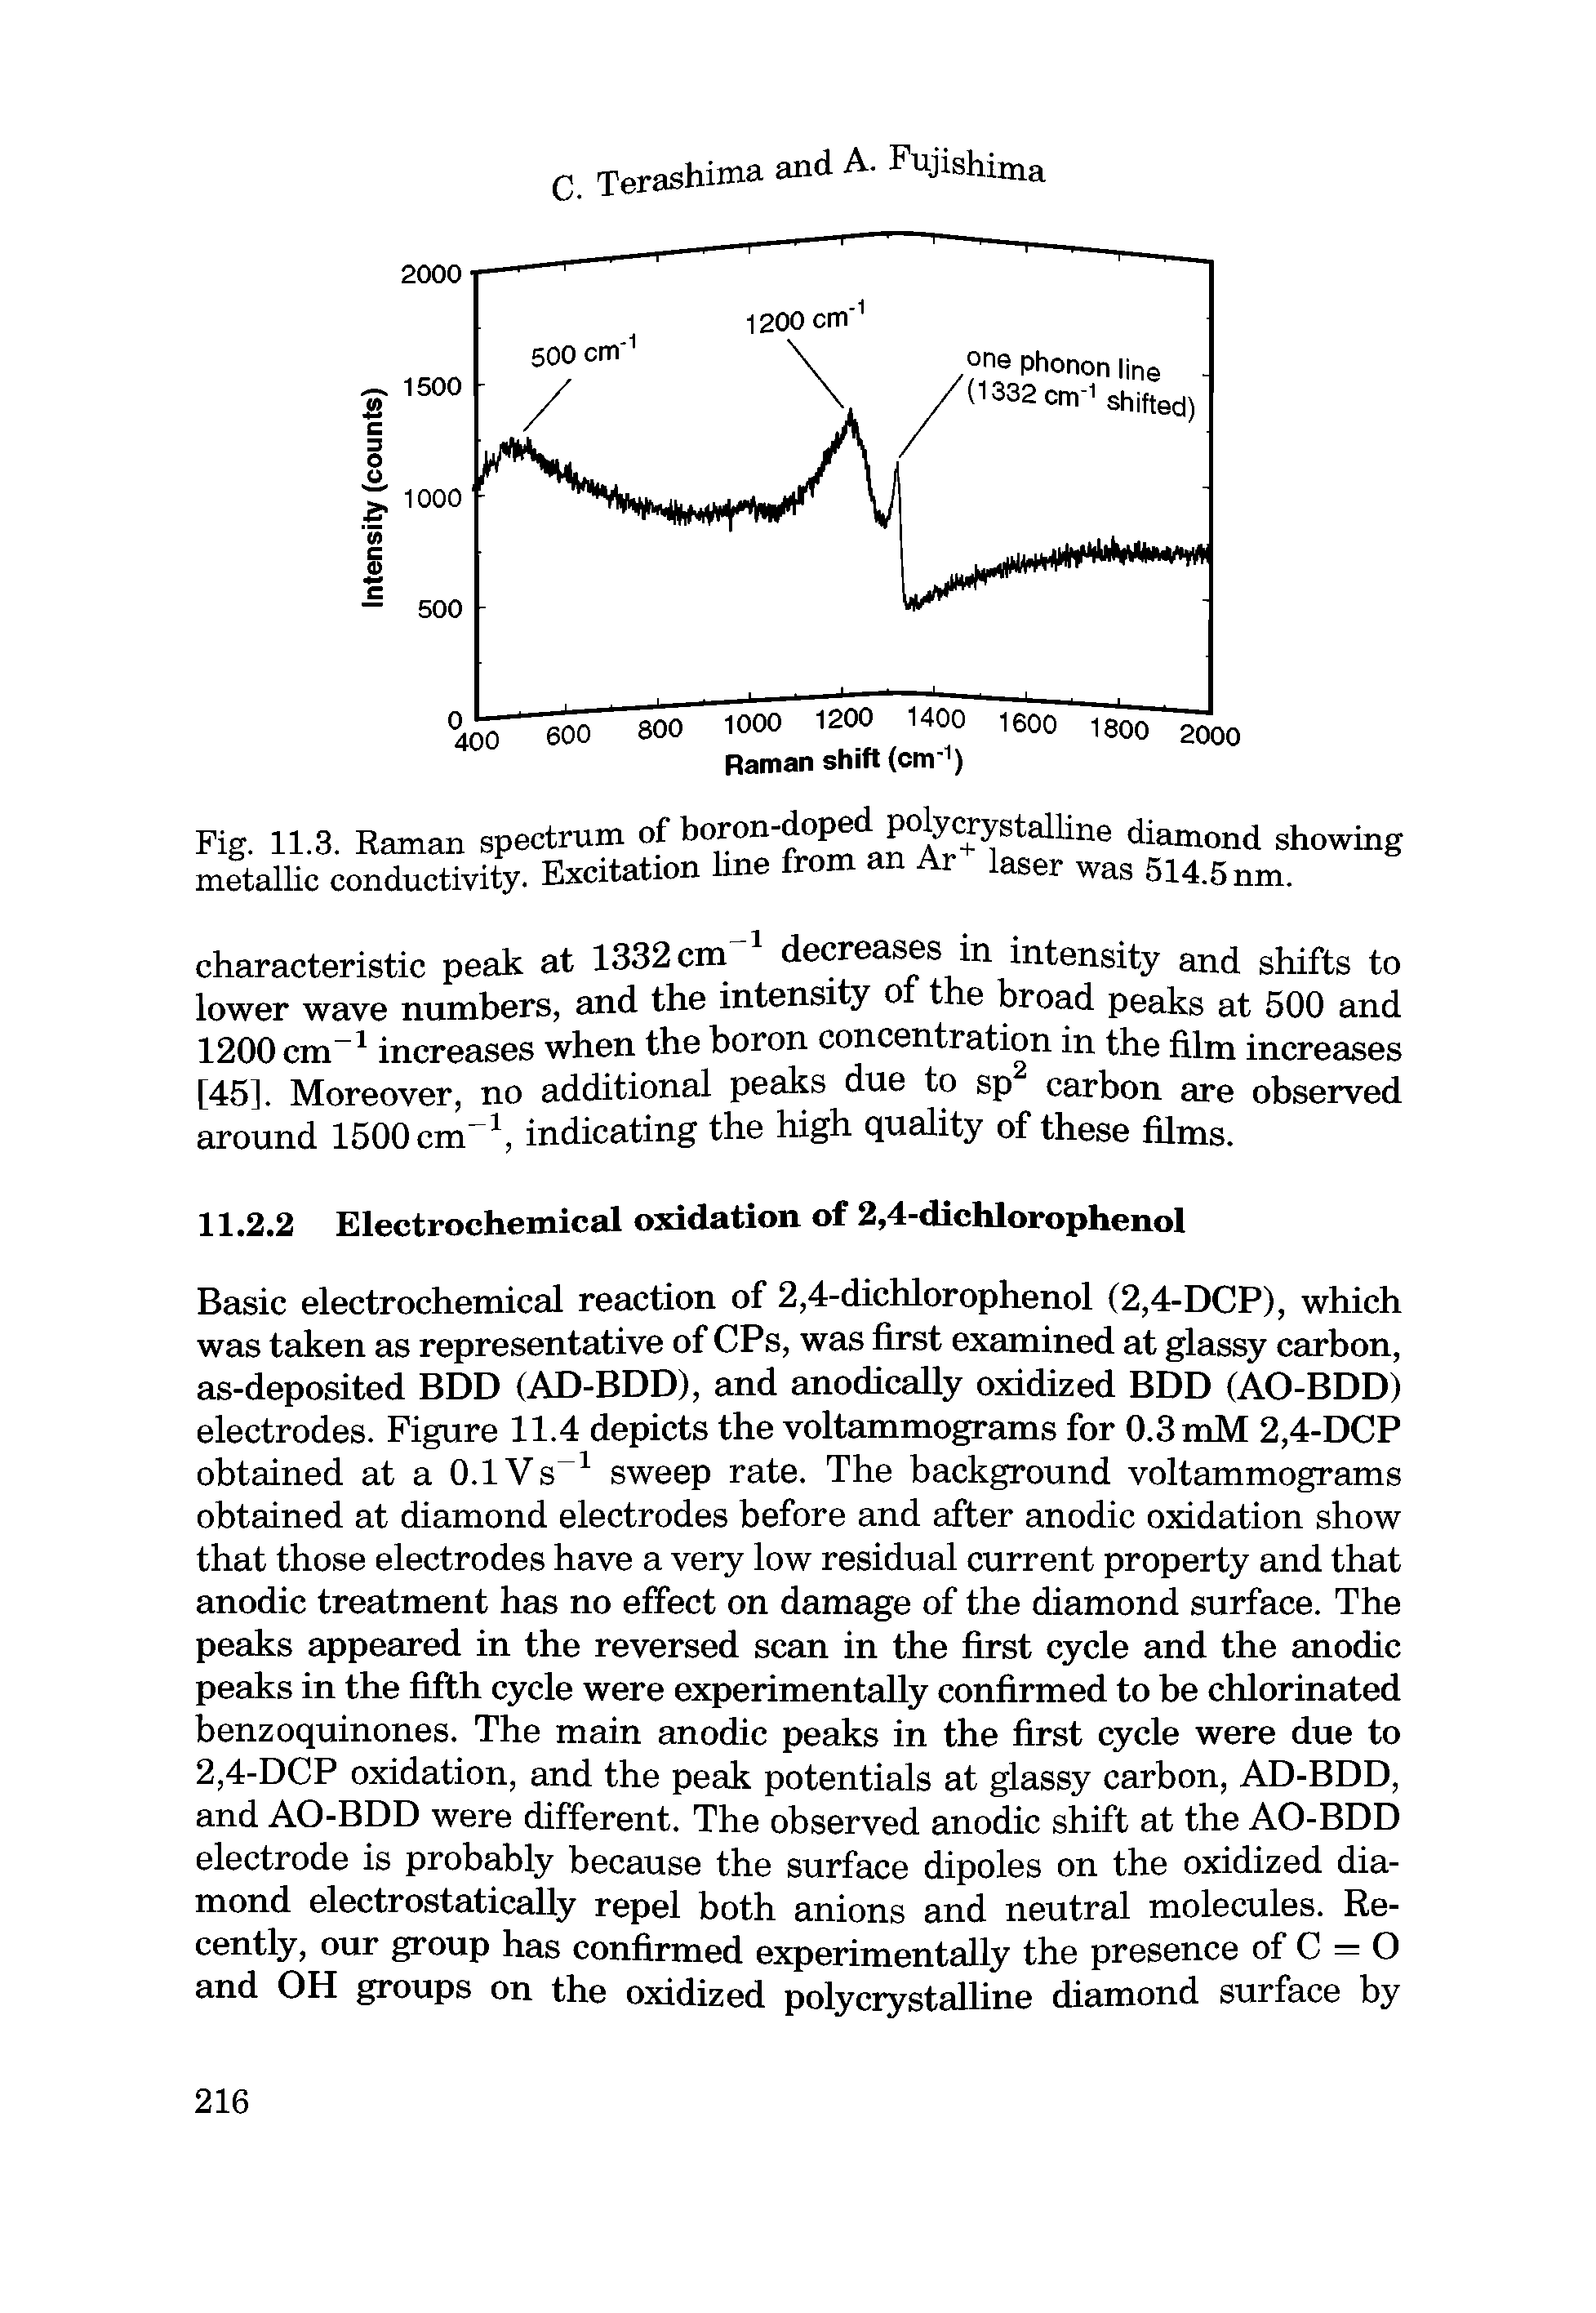 Fig. 11.3. Raman spectrum of boron-dopedpotycrystaUine diamond showing metallic conductivity. Excitation line ro aser was 514.51...